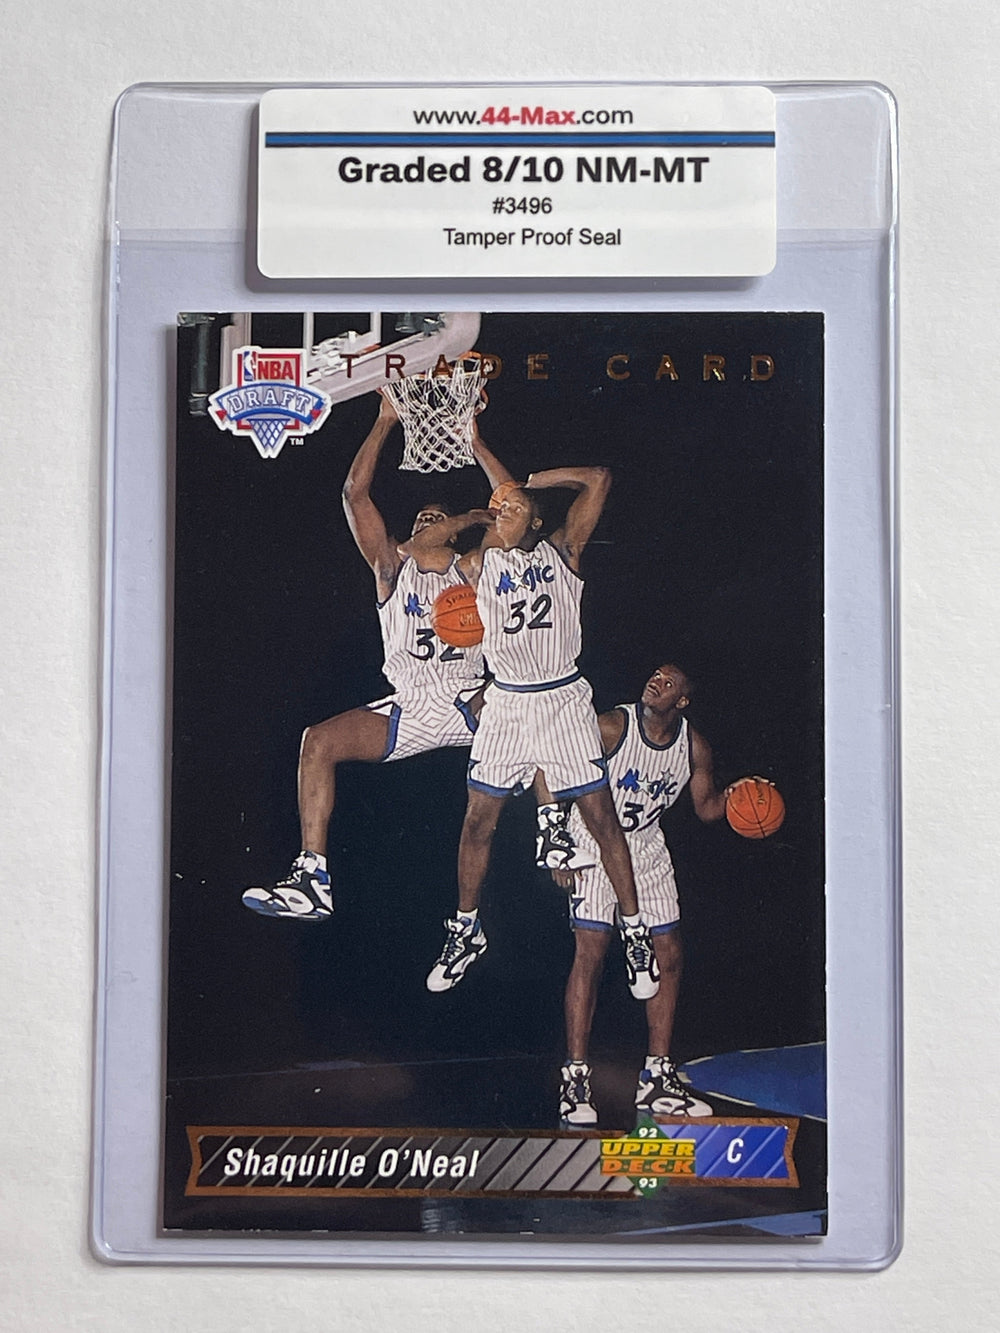 Shaquille O'Neal 1992/93 Upper Deck #1B Card. 44-Max 8/10 NM-MT #3496